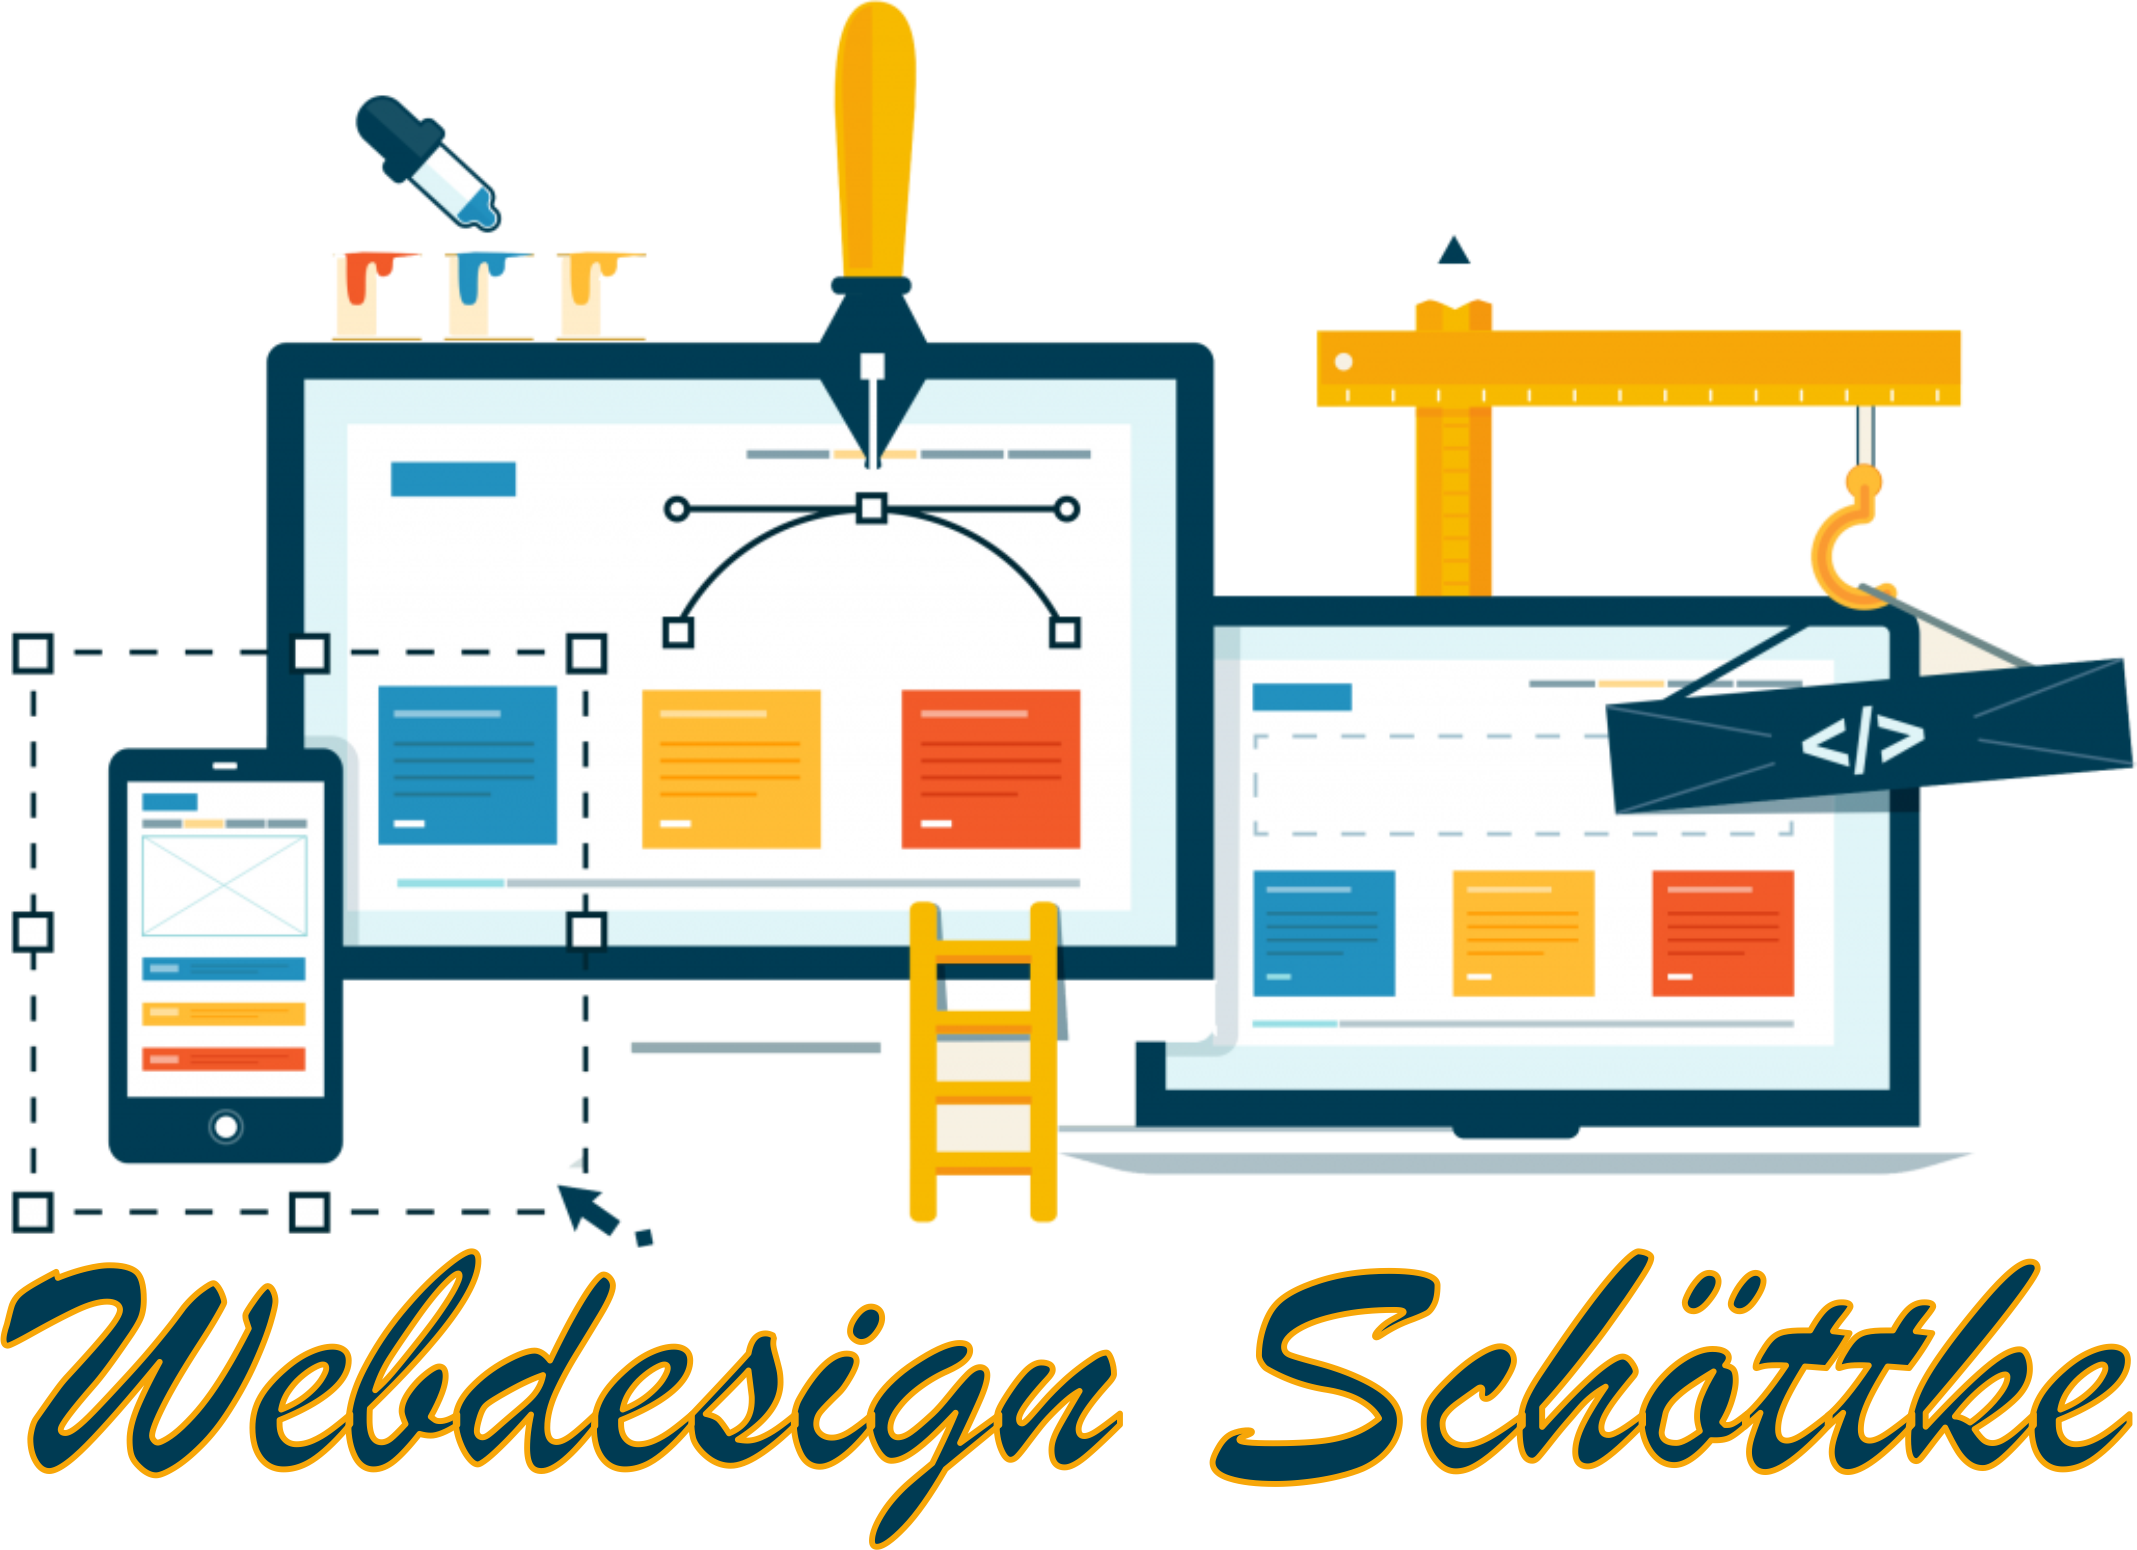 (c) Webdesign-schoettke.de